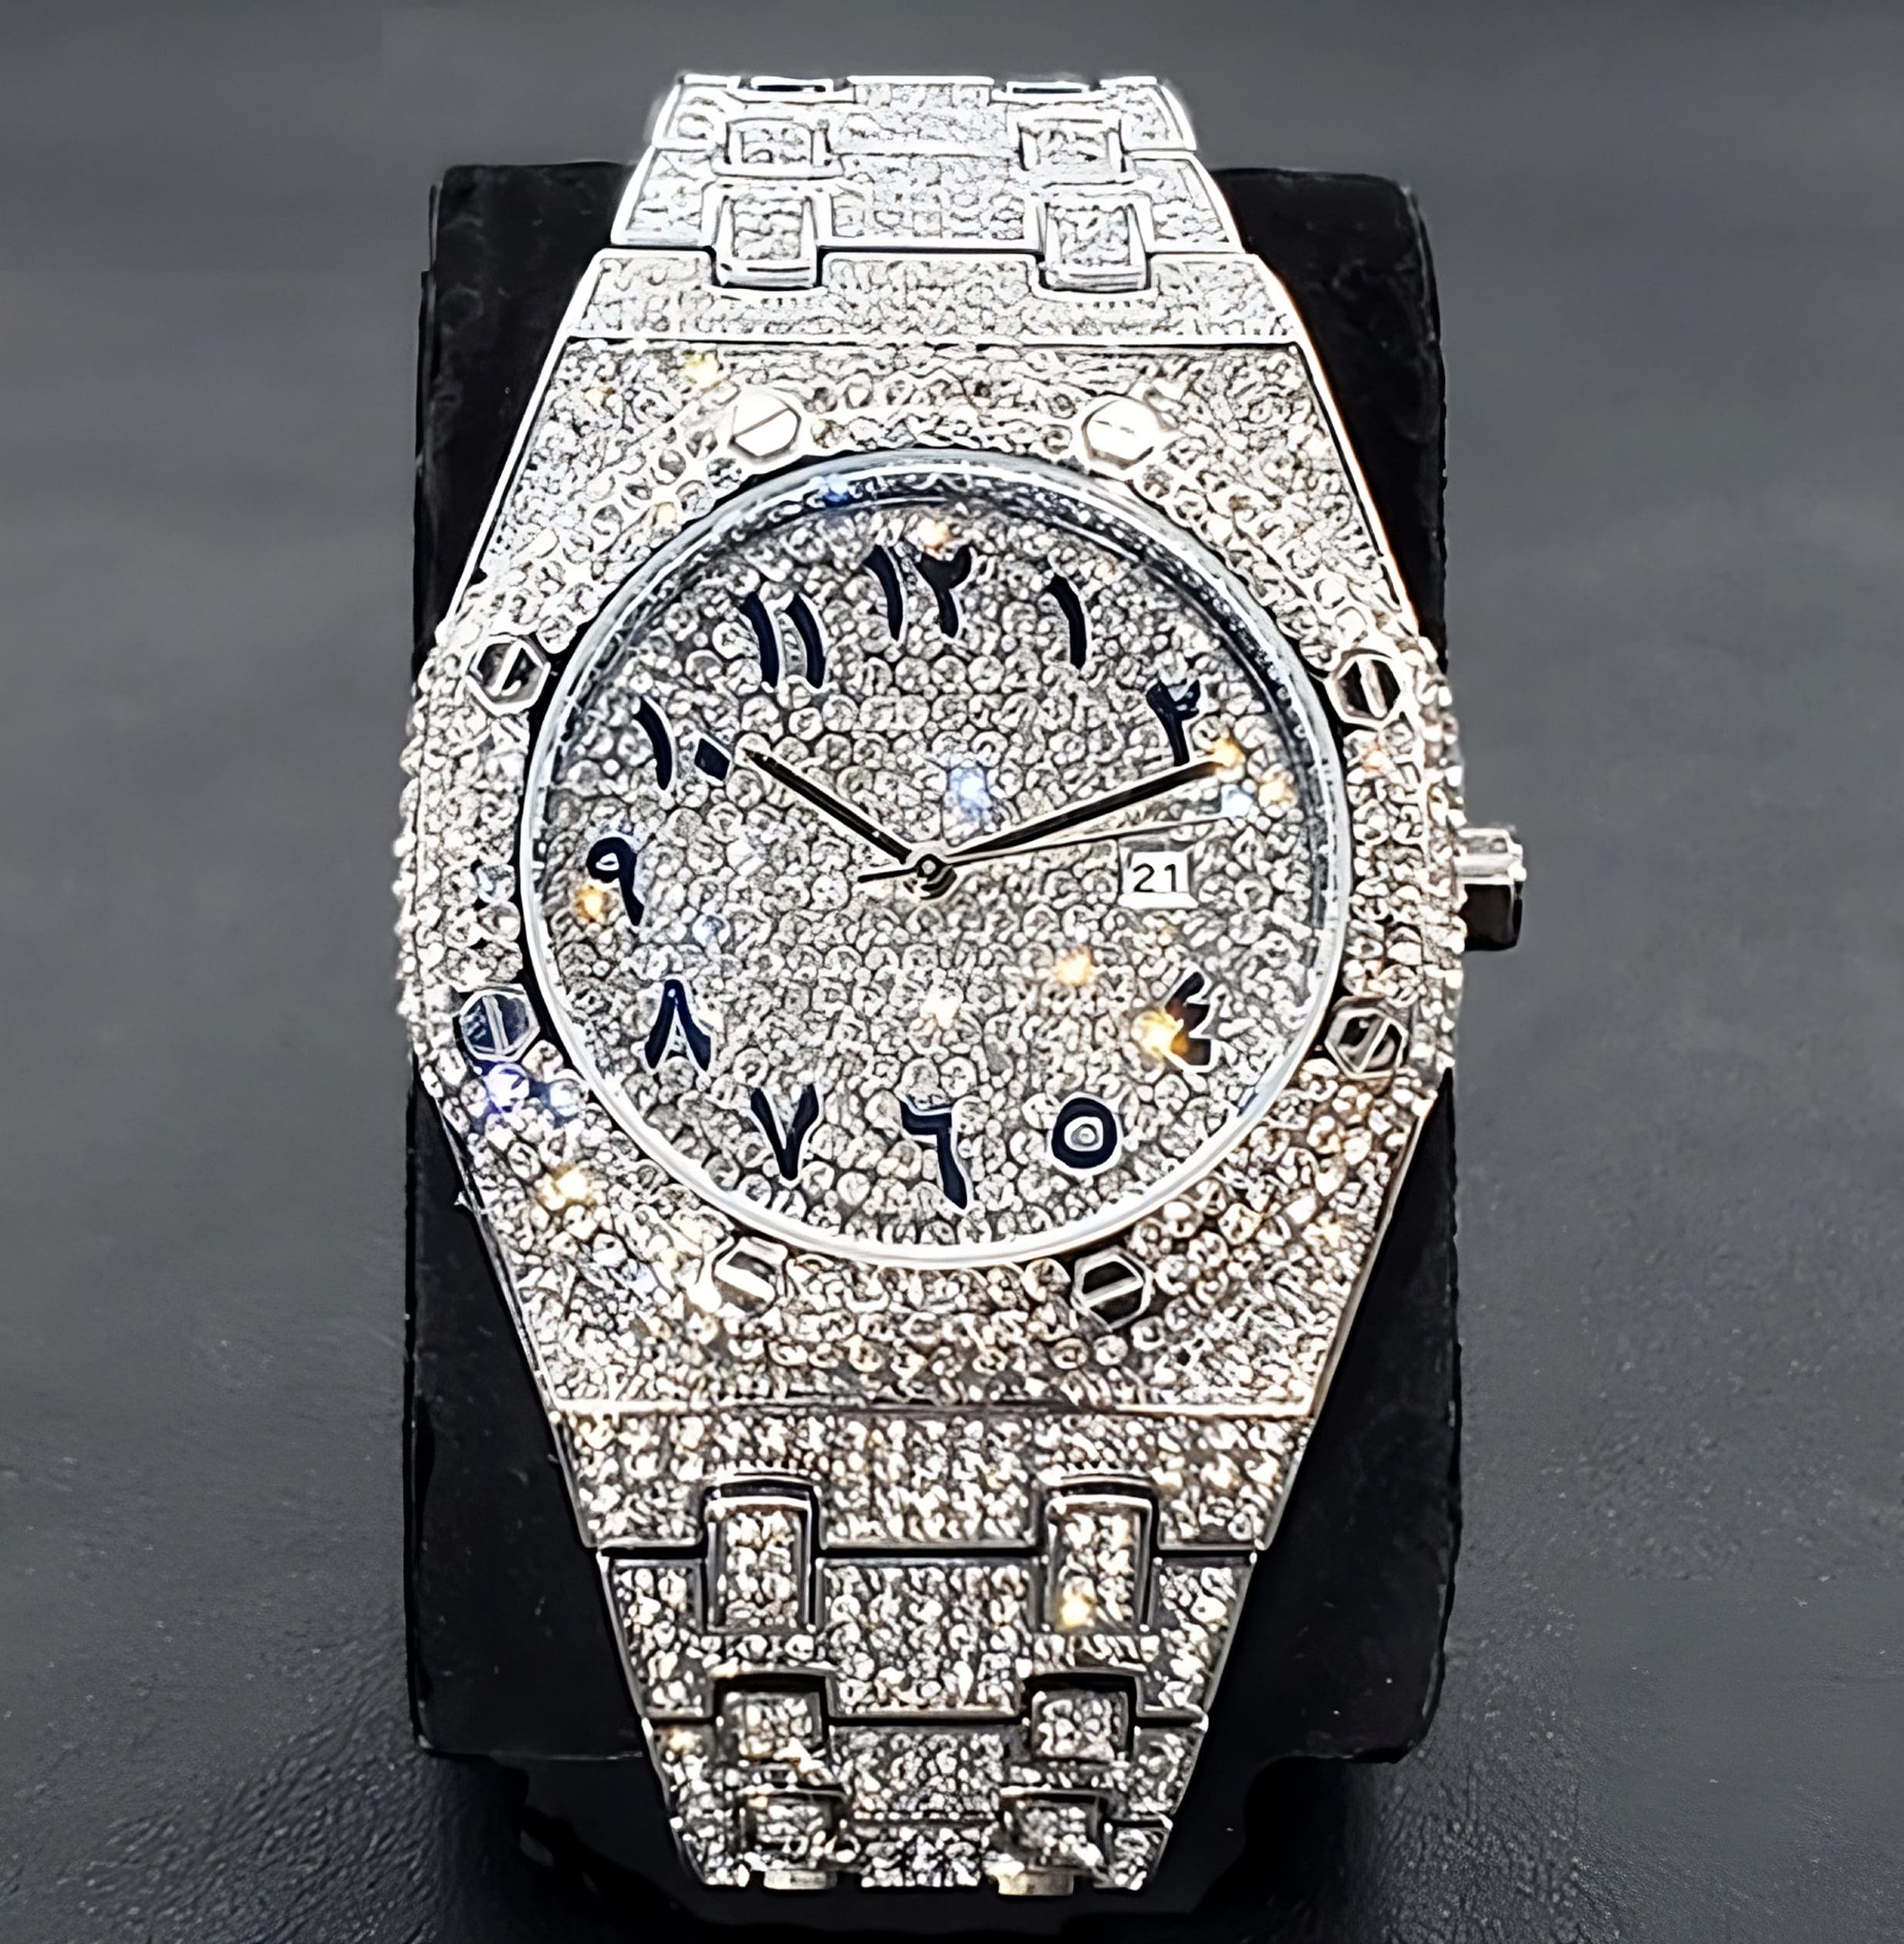 Jet Setter Rooster diamond watch